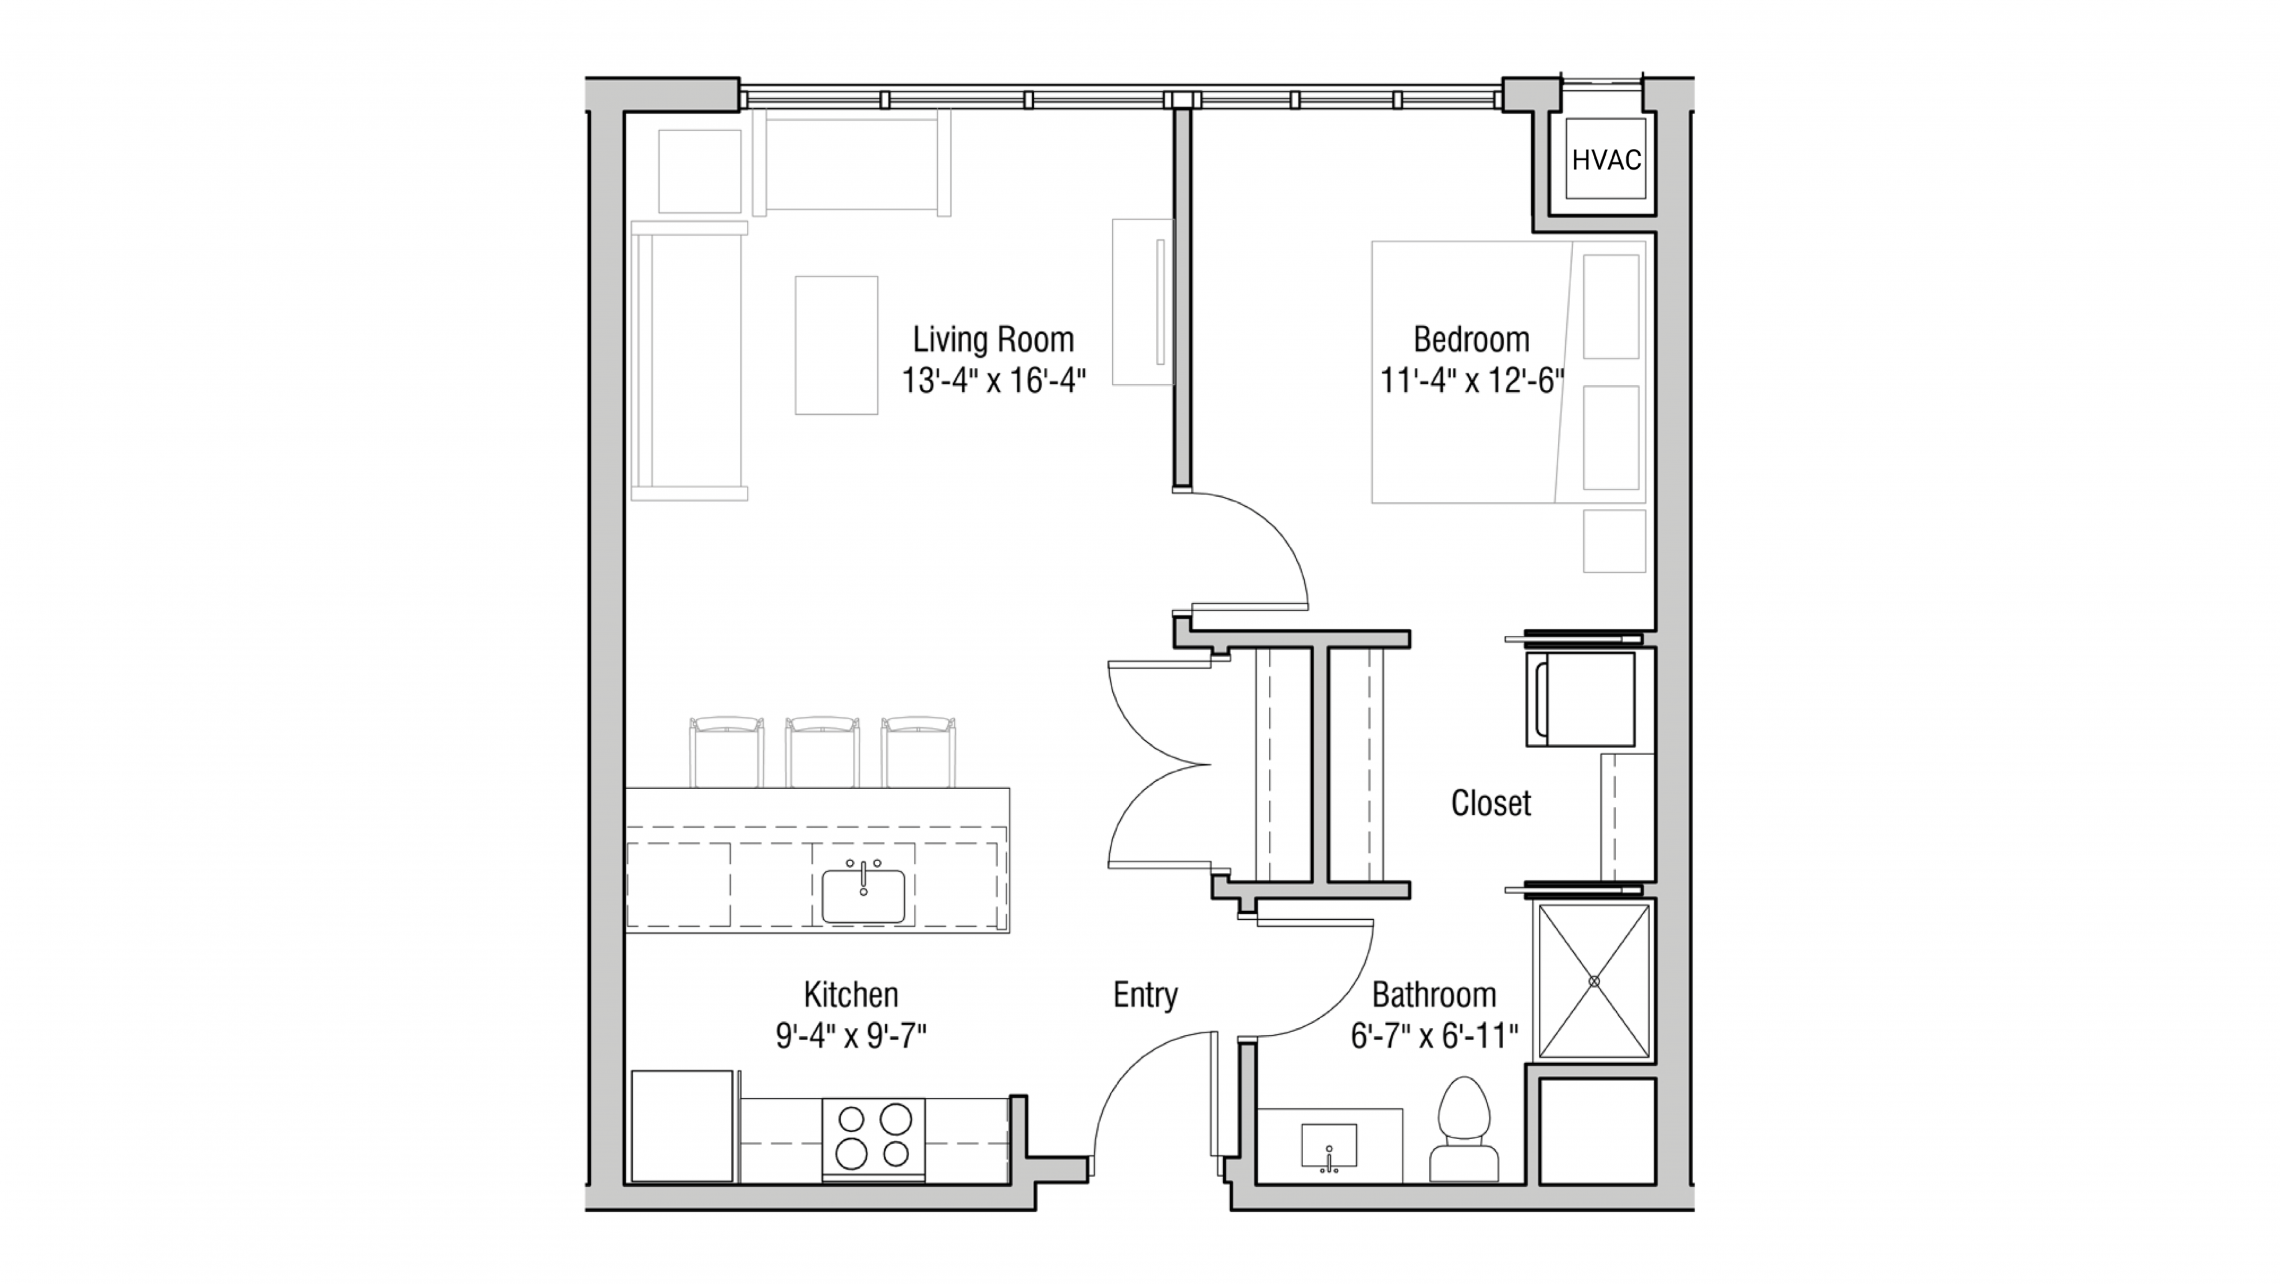 ULI Quarter Row 321 - One Bedroom, One Bathroom